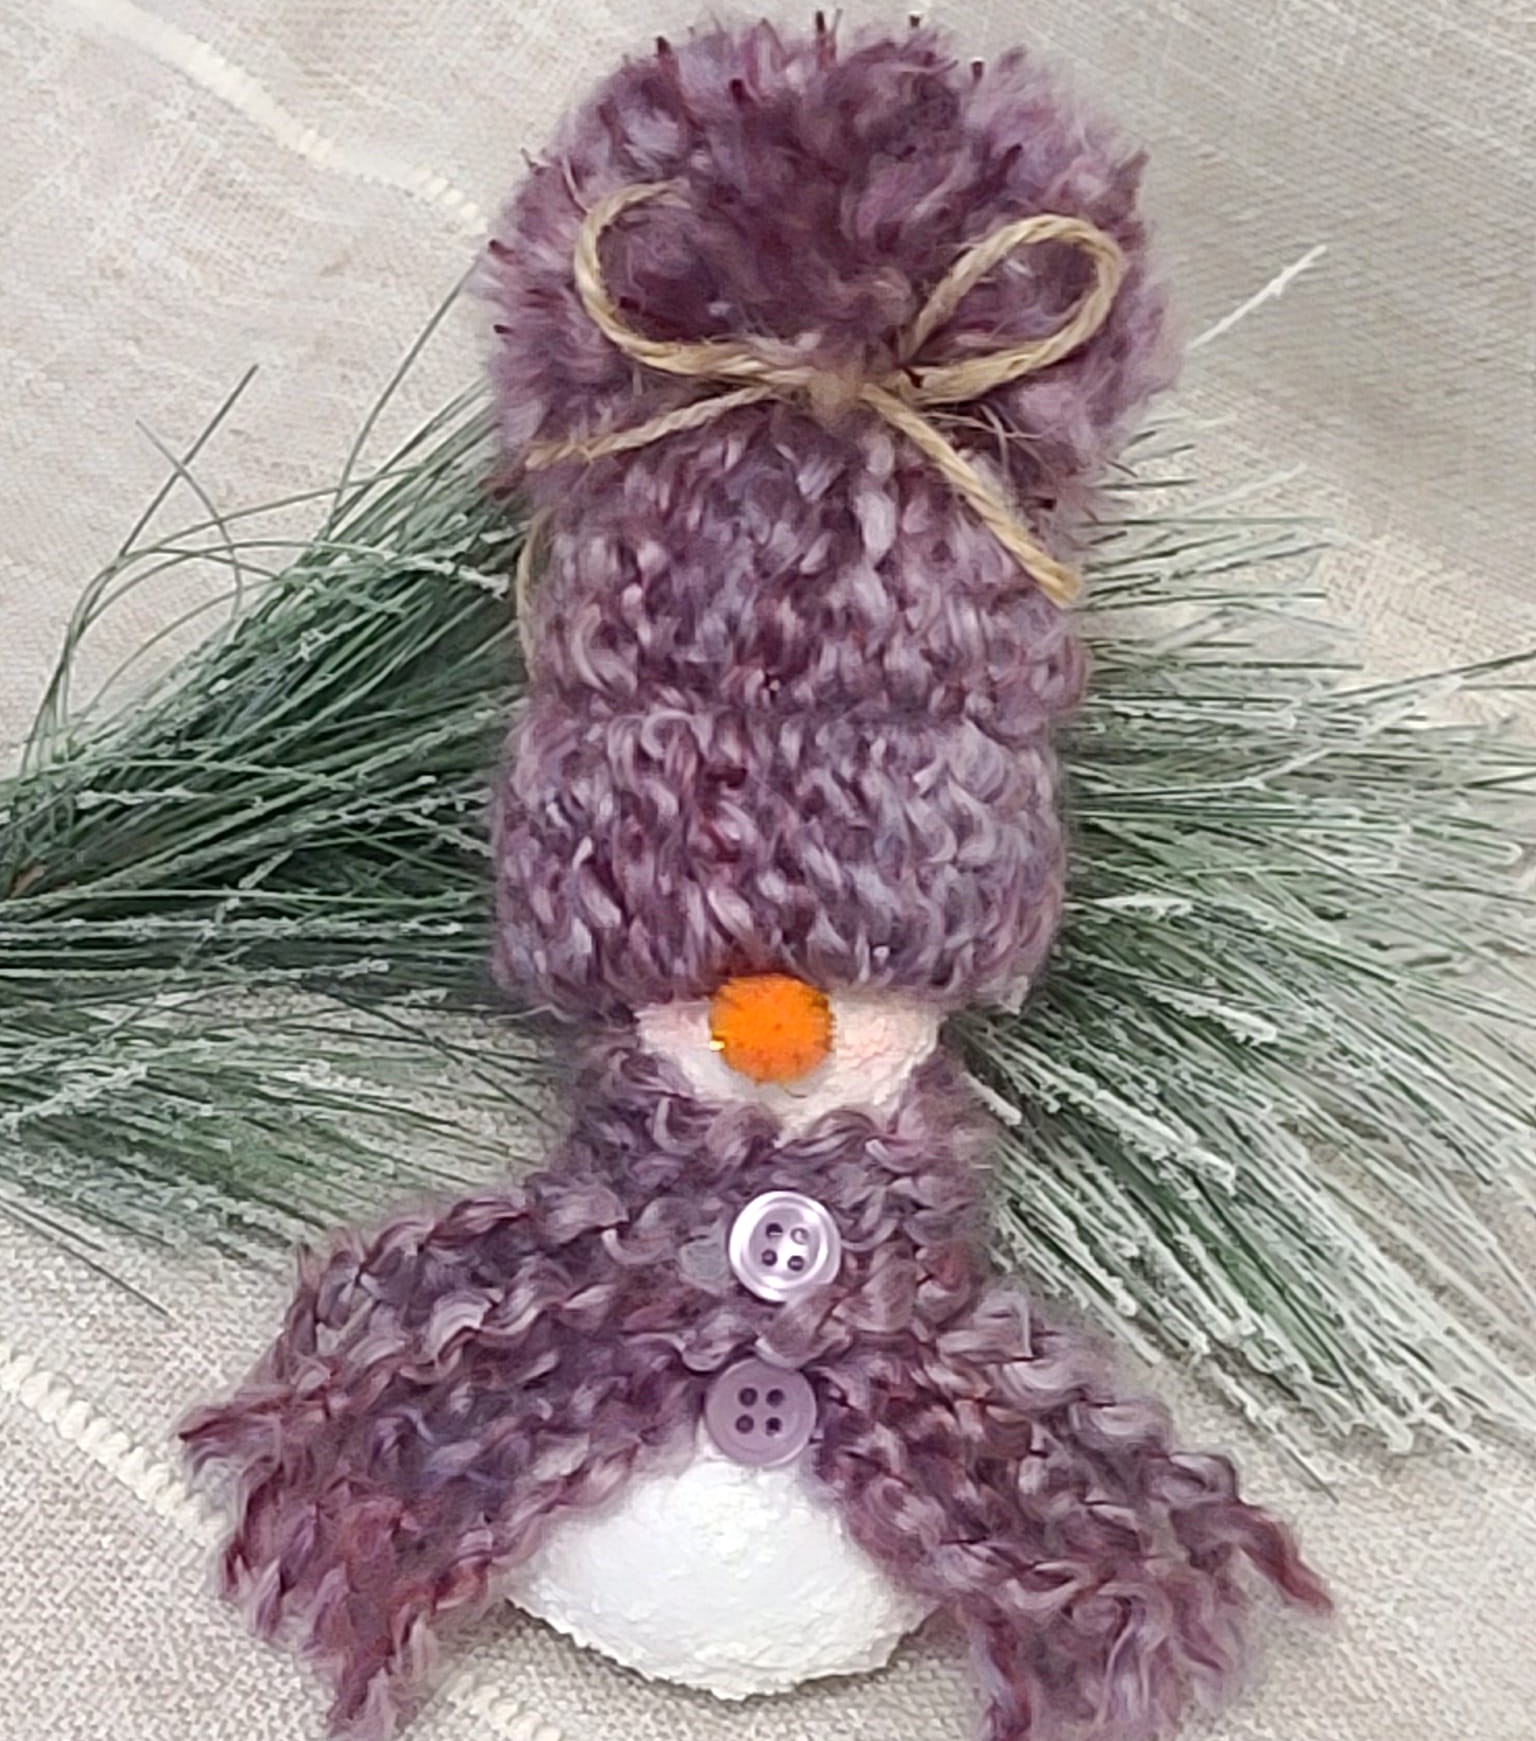 Handpainted gourd snowman ornament with knit hat - dark purple